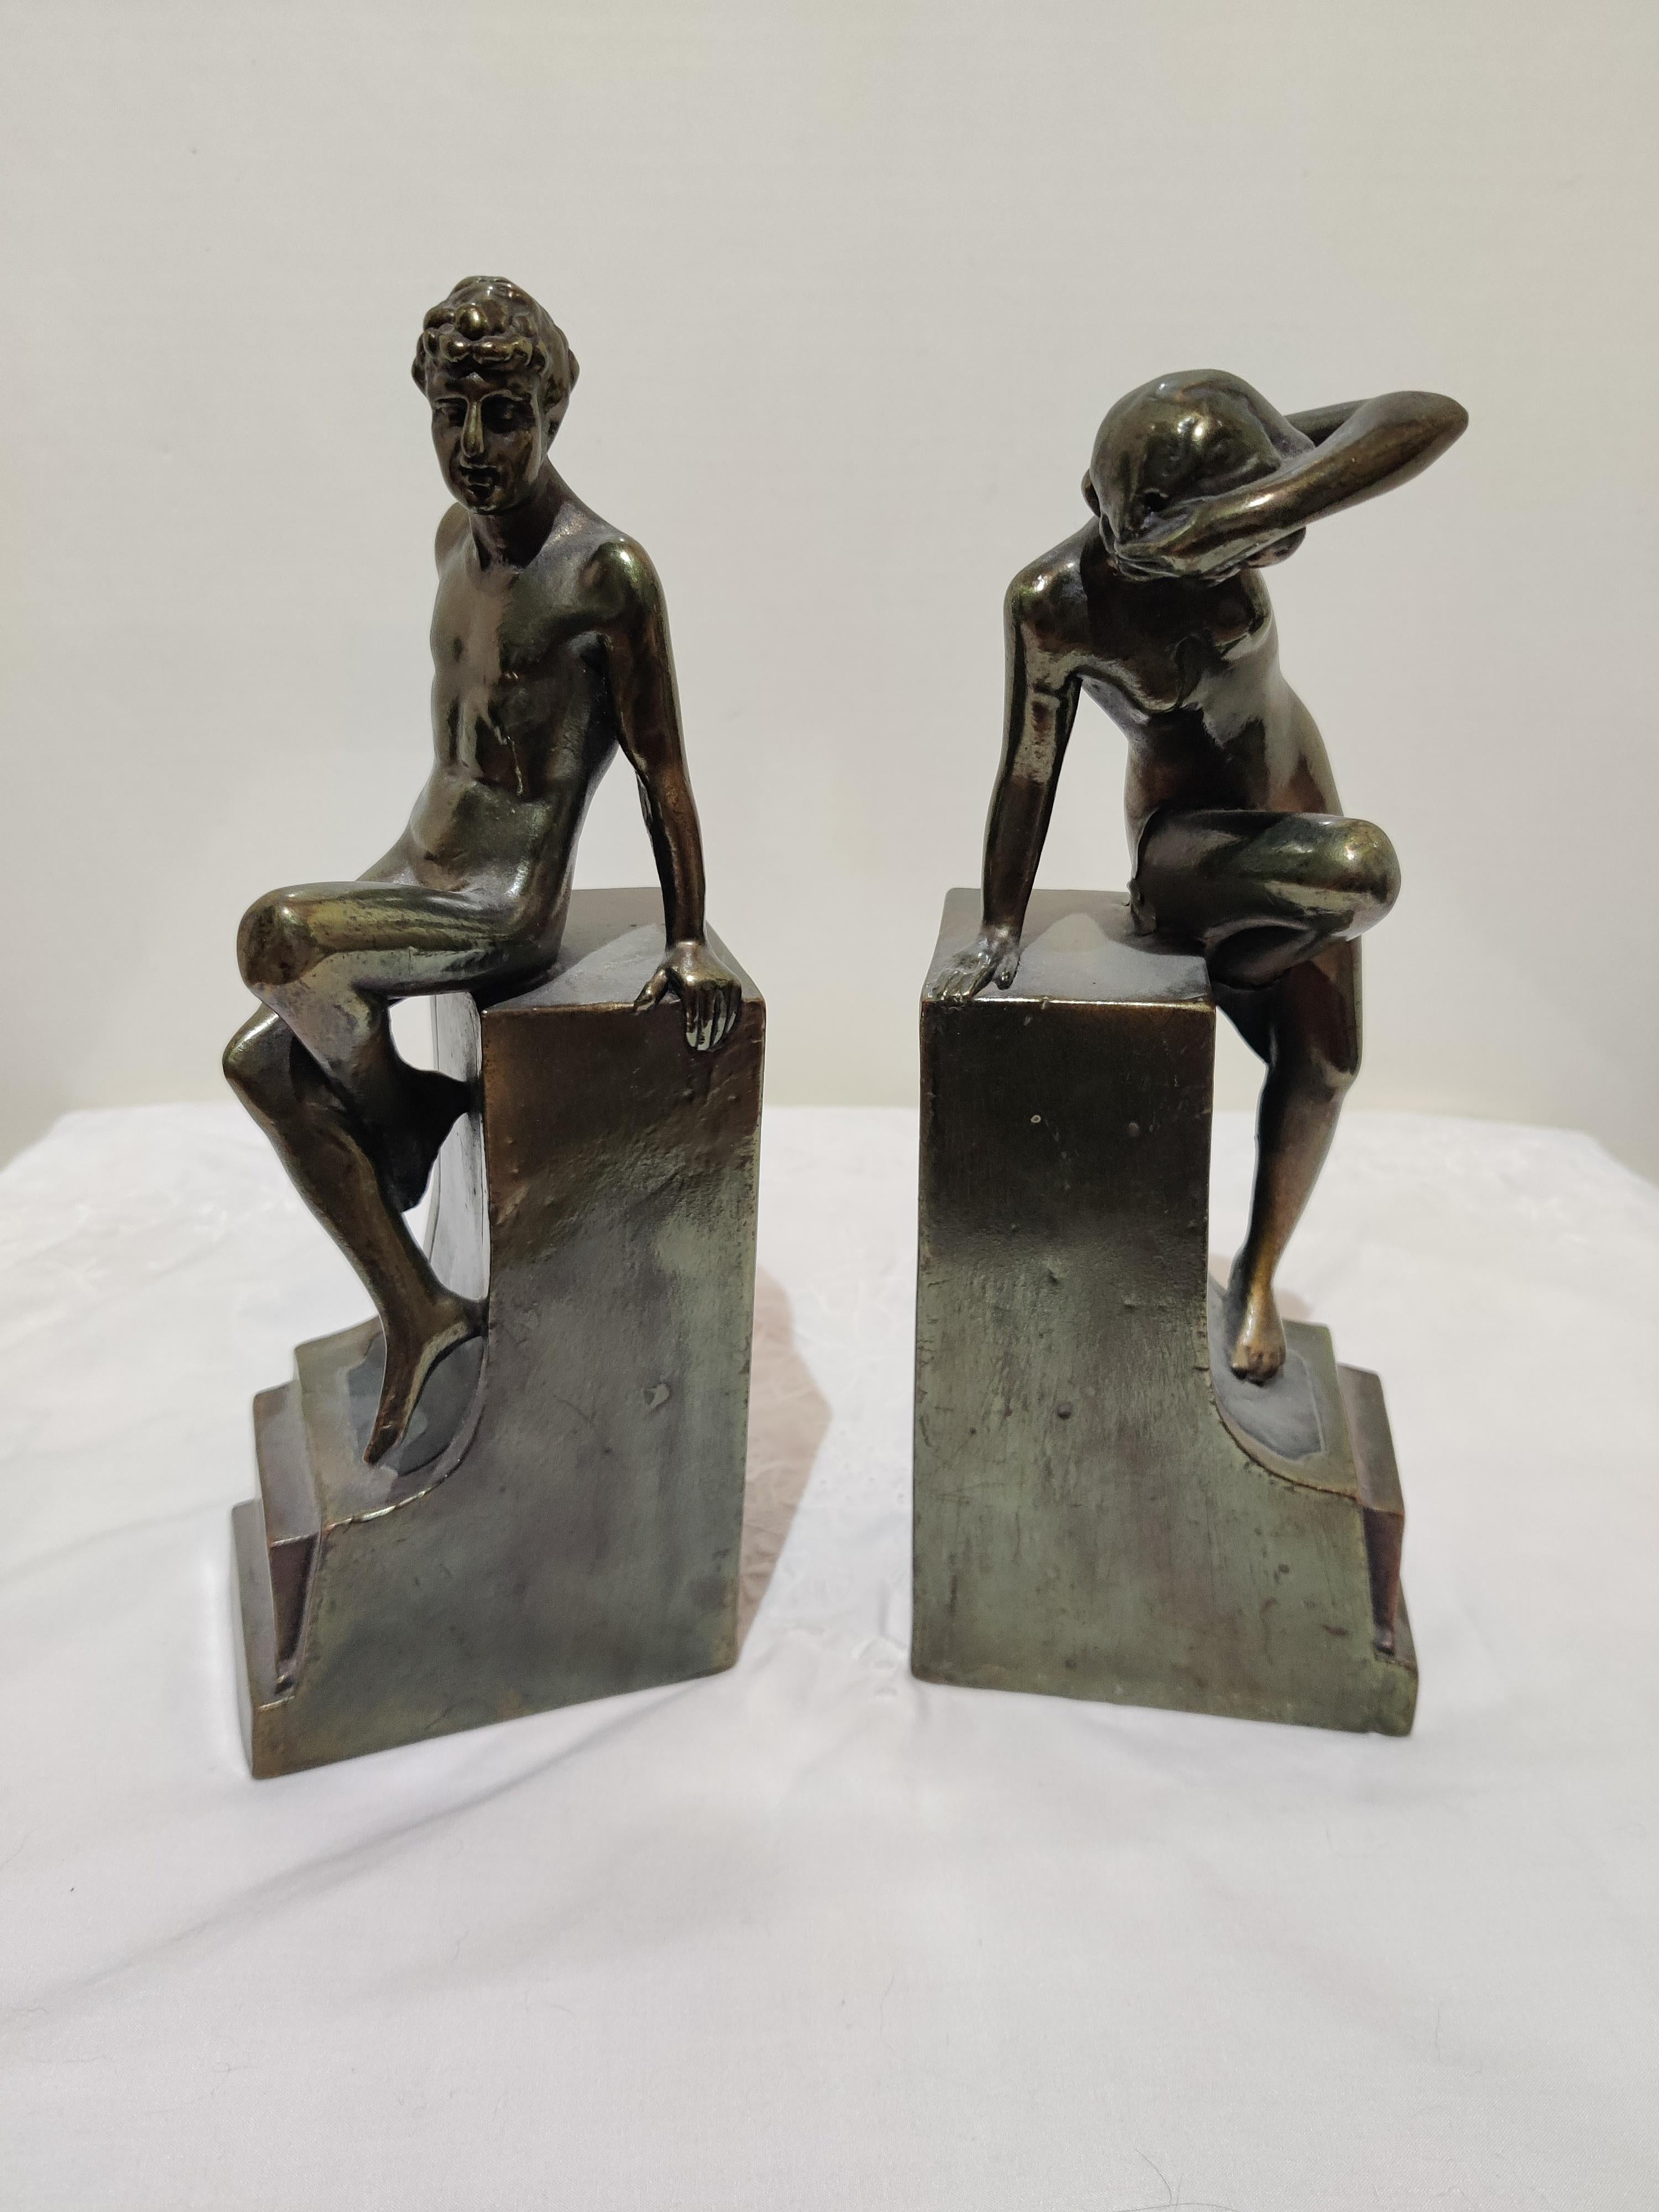 Classic Art Nude Bronze Bookends
Early 20th century Art Nouveau